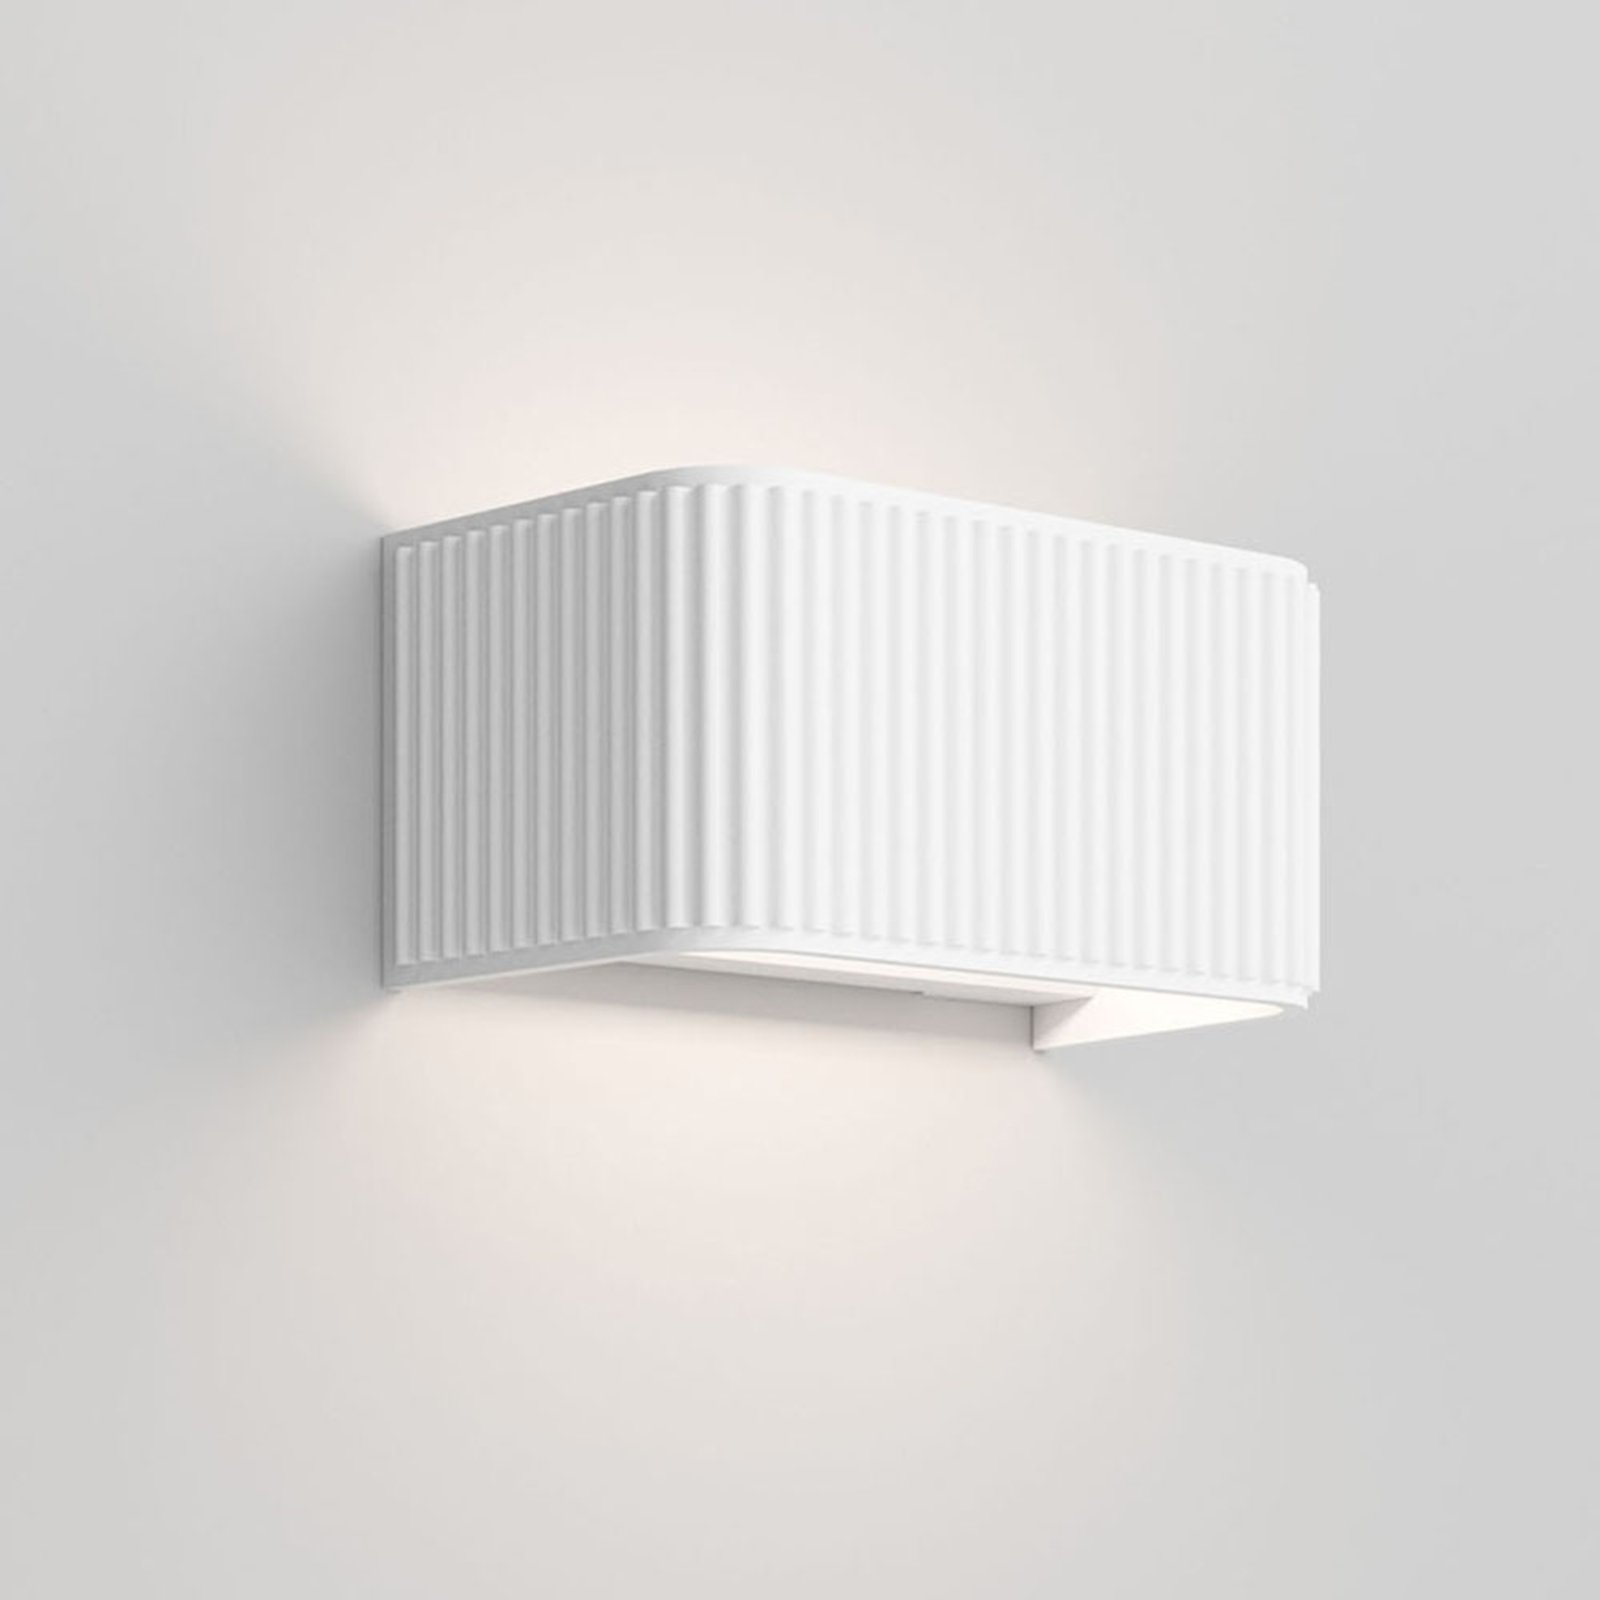 Rotaliana Dresscode W1 LED-Wandlampe weiß 2.700K